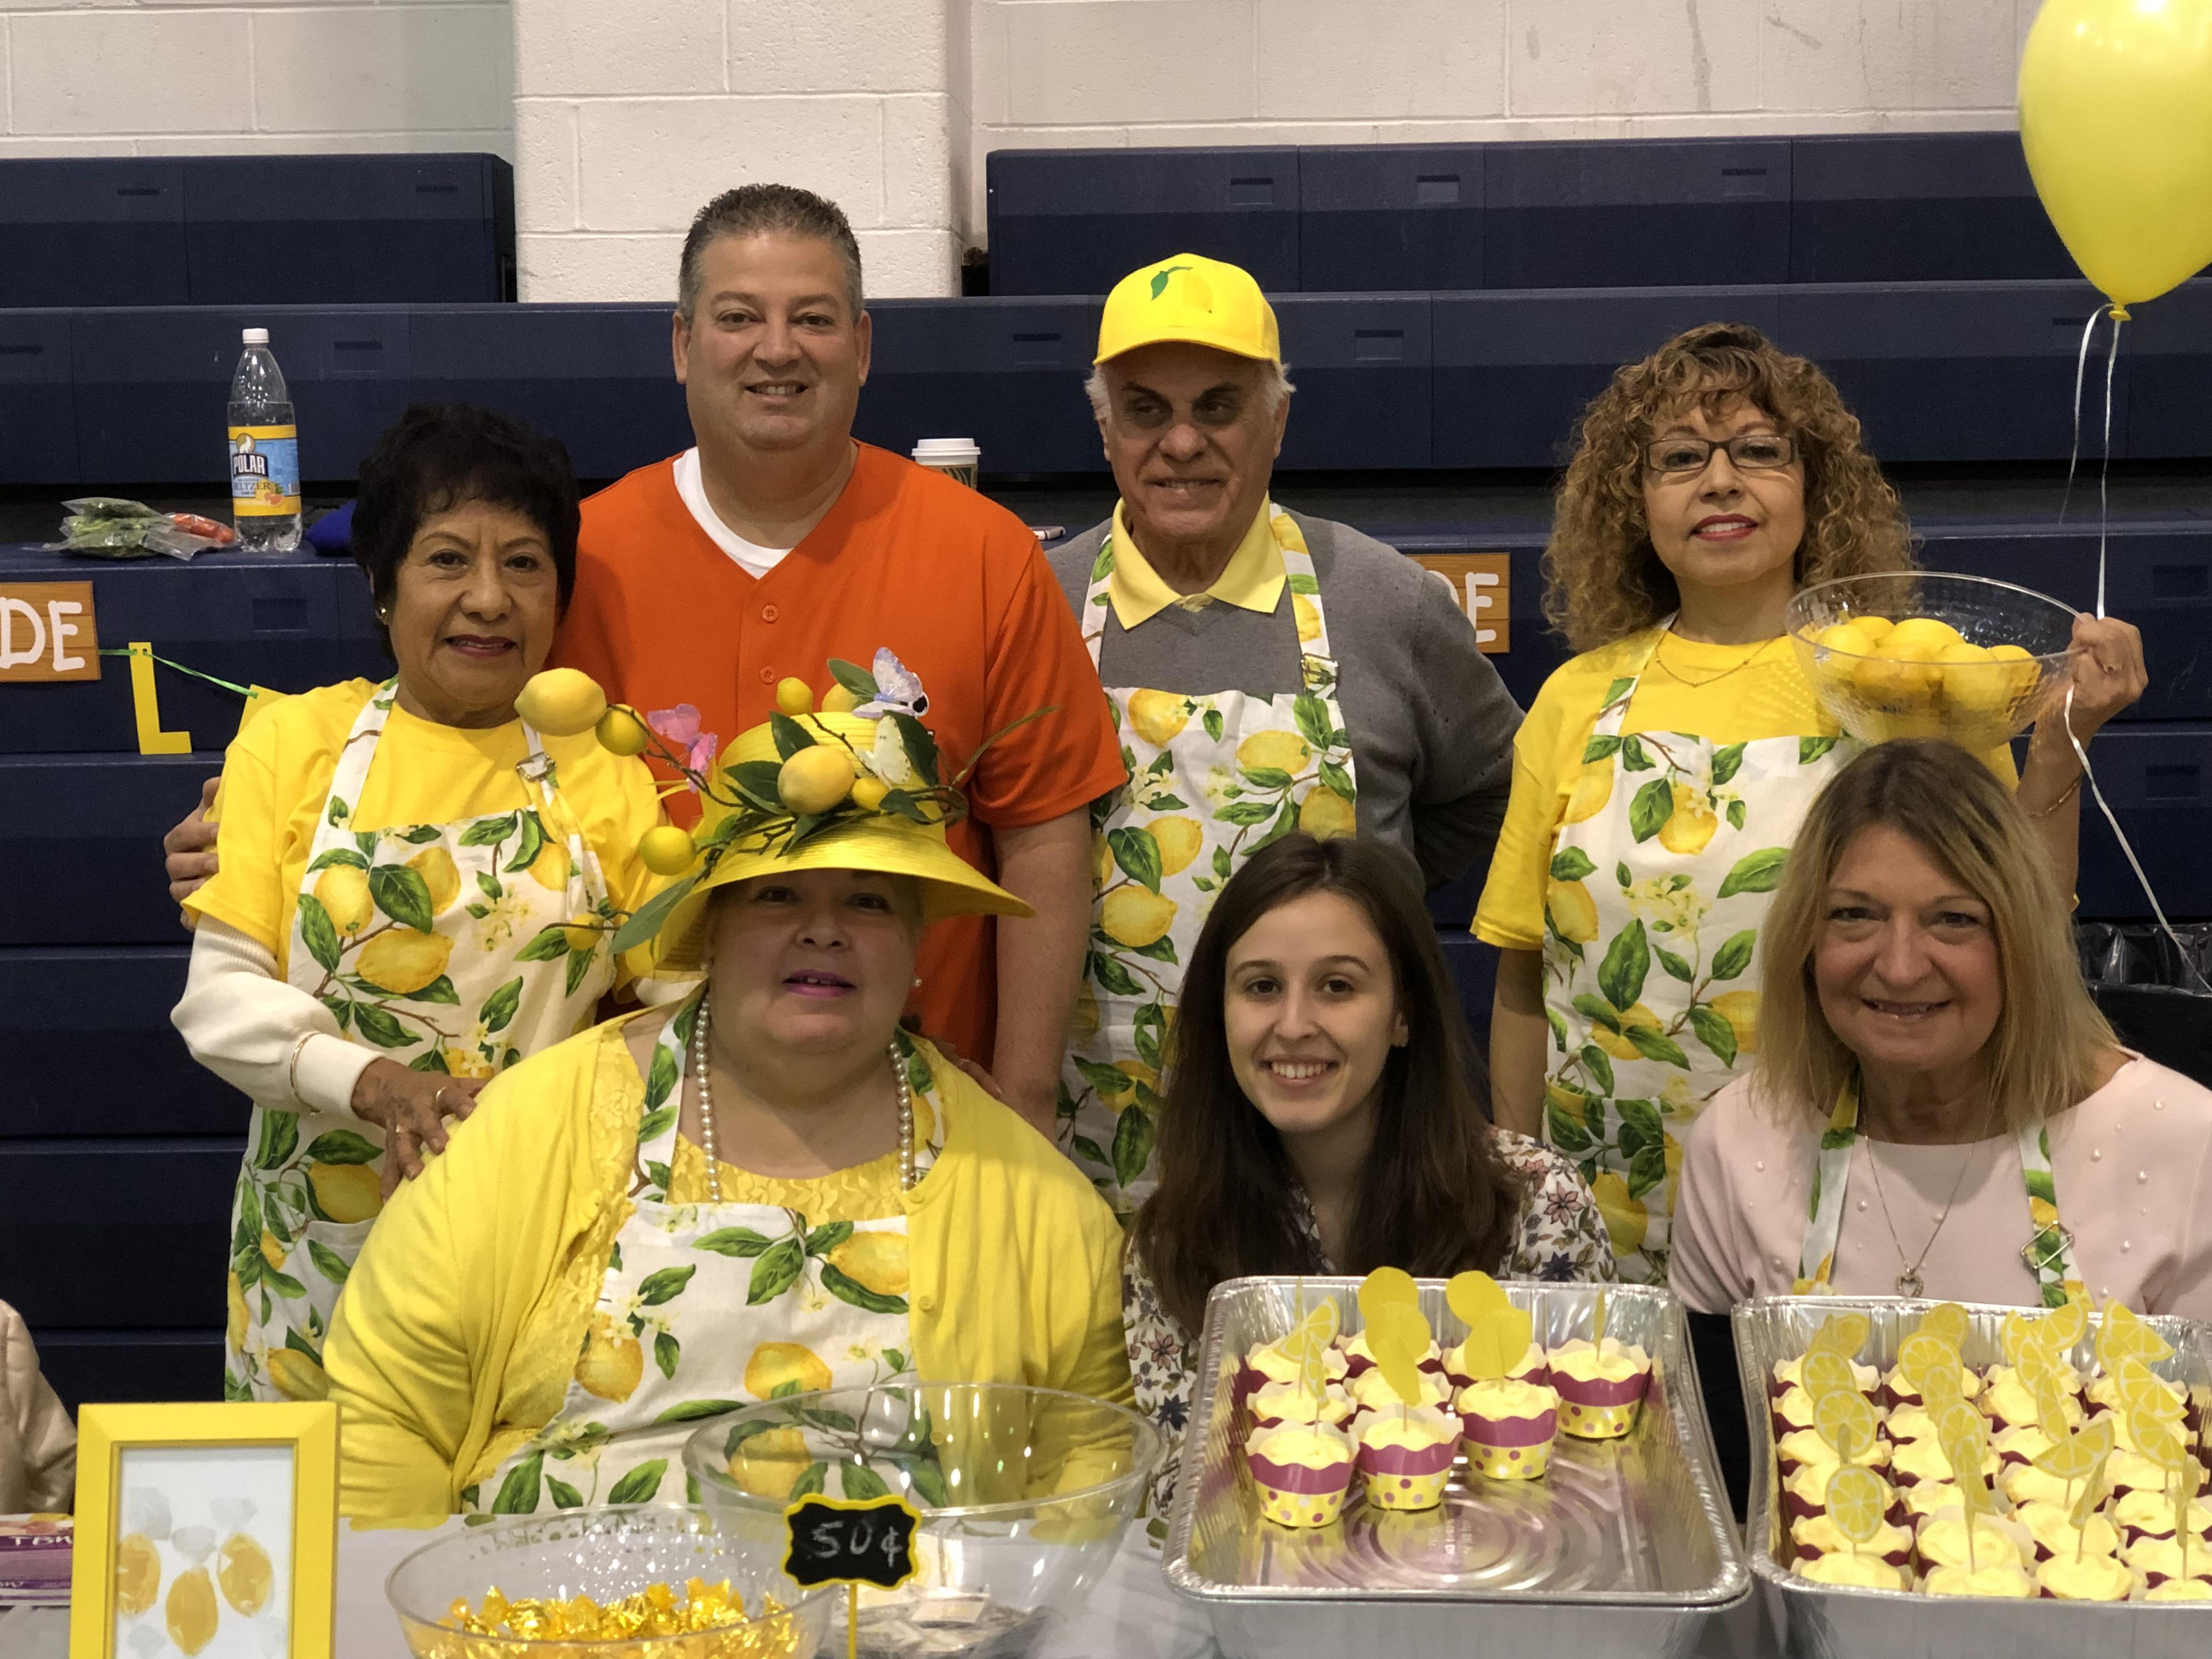 Mr. Rivera with Washington Staff at the table with fresh lemonade and lemon cupcakes